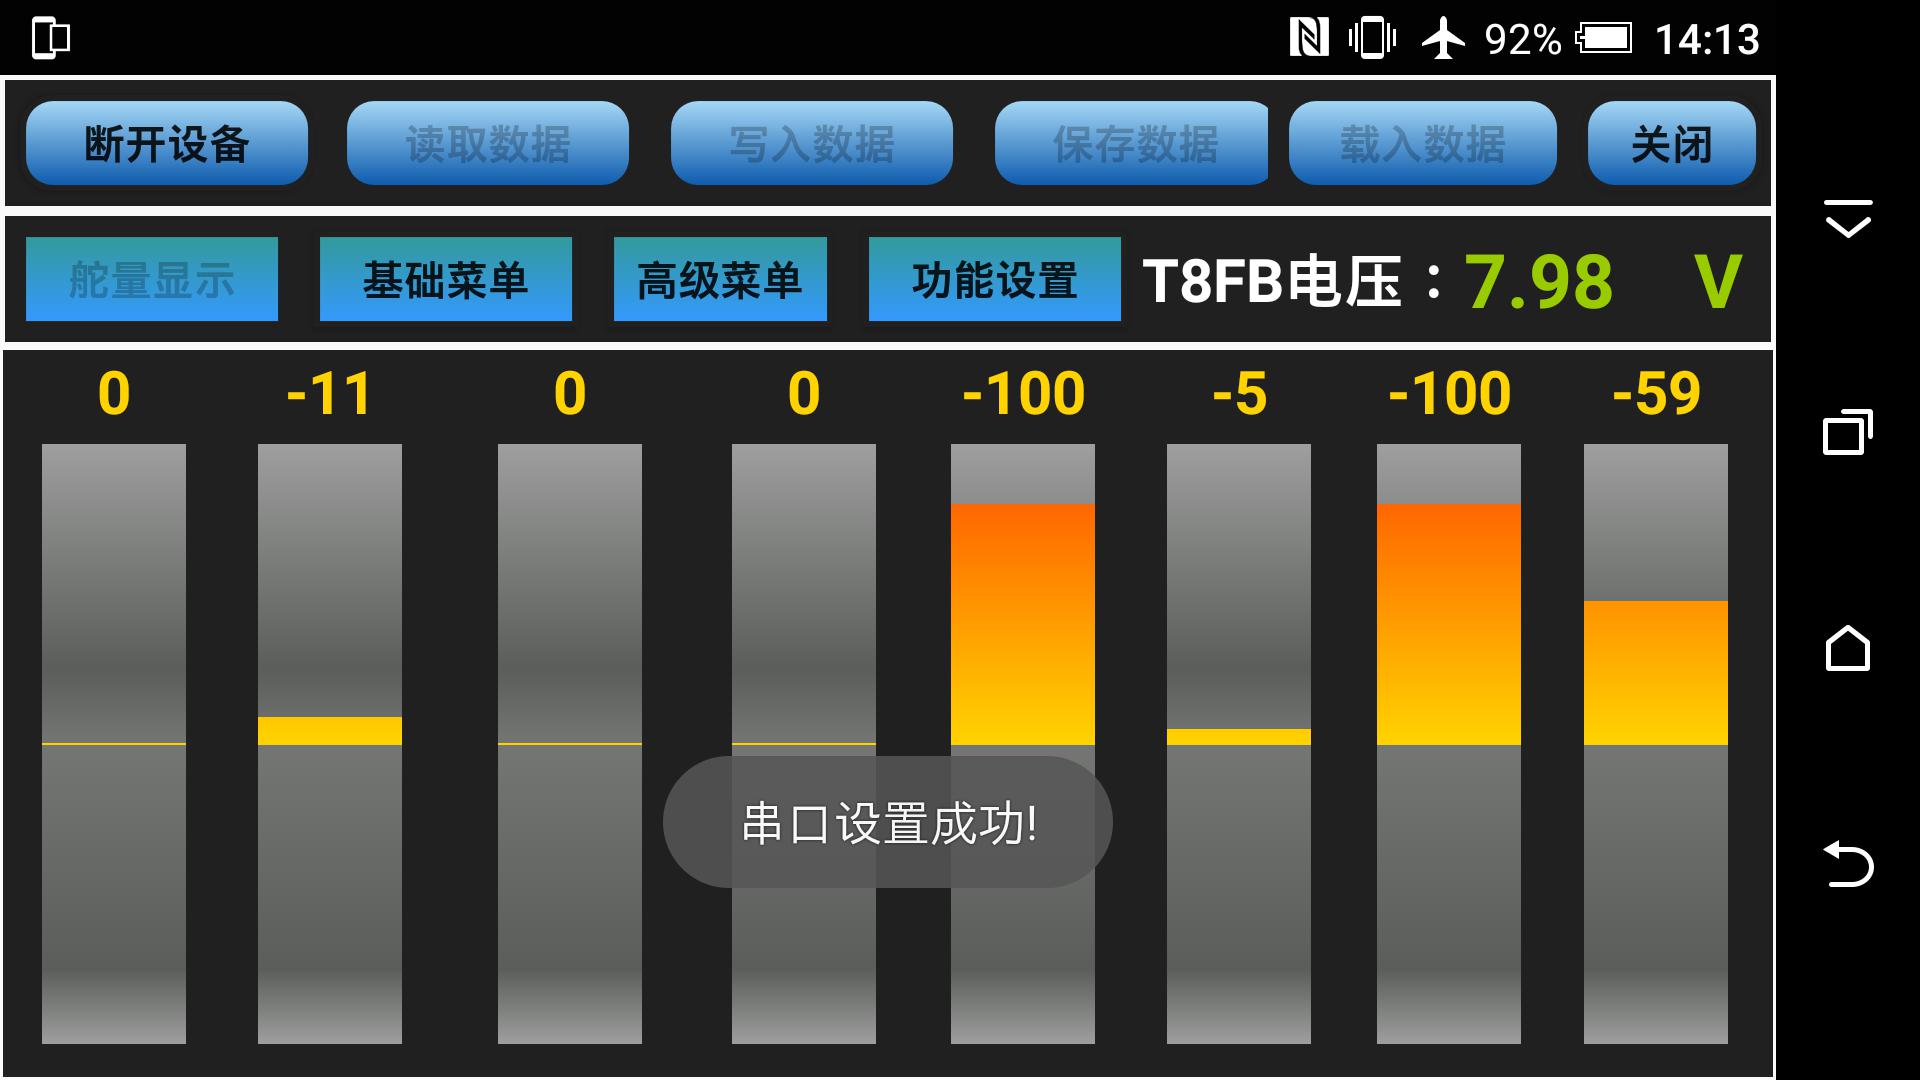 T8FB手机app调试方法步骤 电池,遥控器,固件 作者:乐迪support 5567 